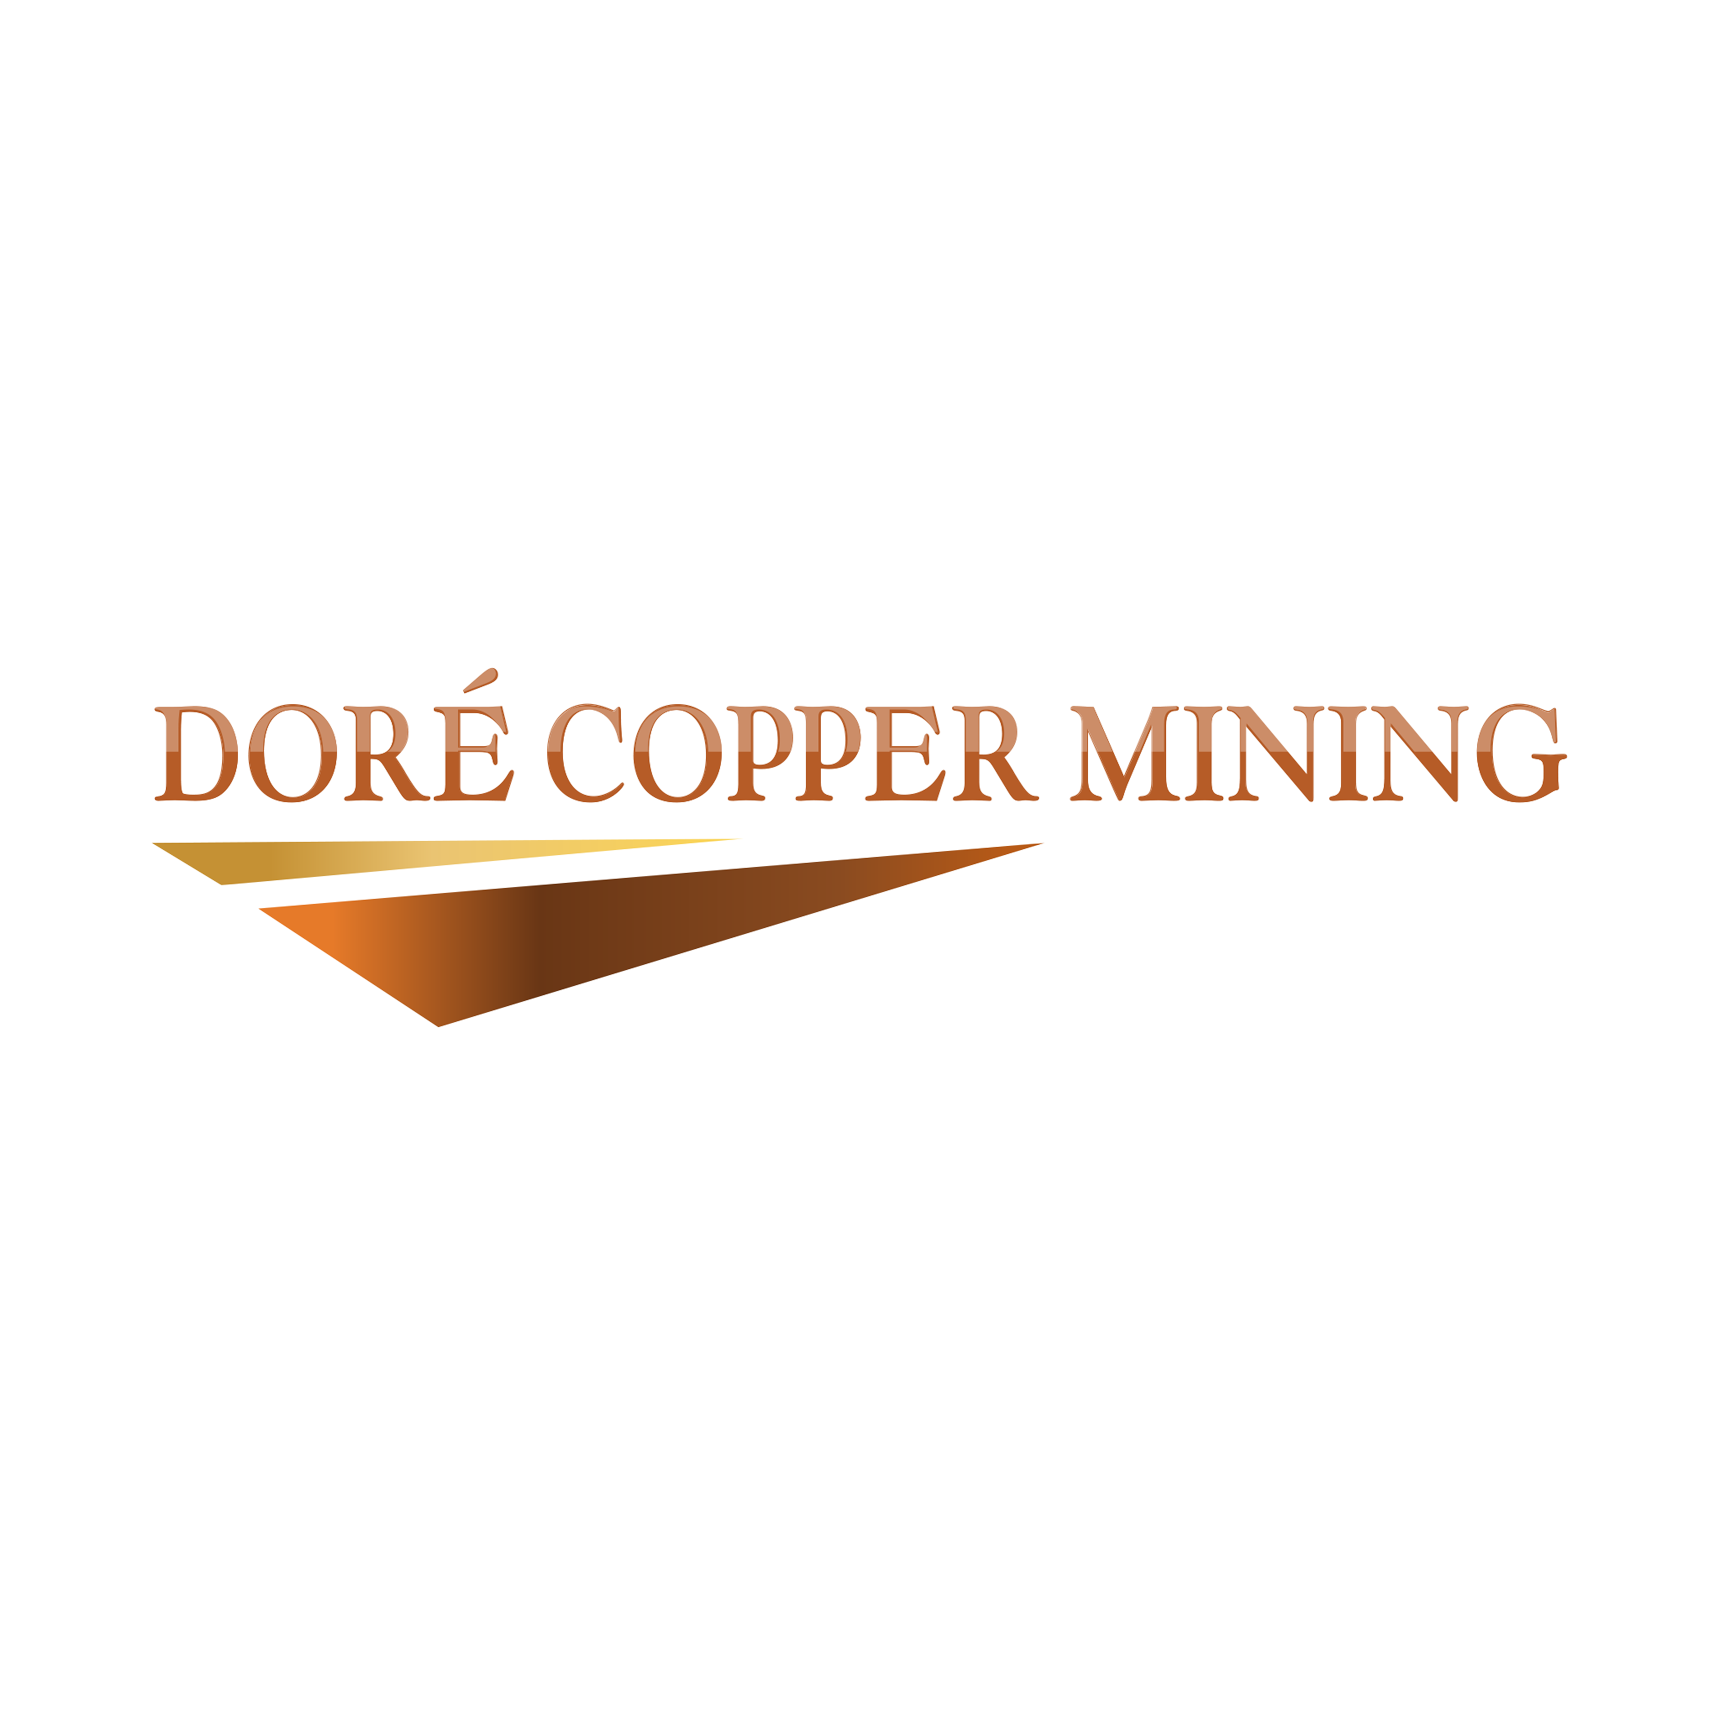 Dore Copper drills 10.34 g/t gold over 4 metres at Joe Mann